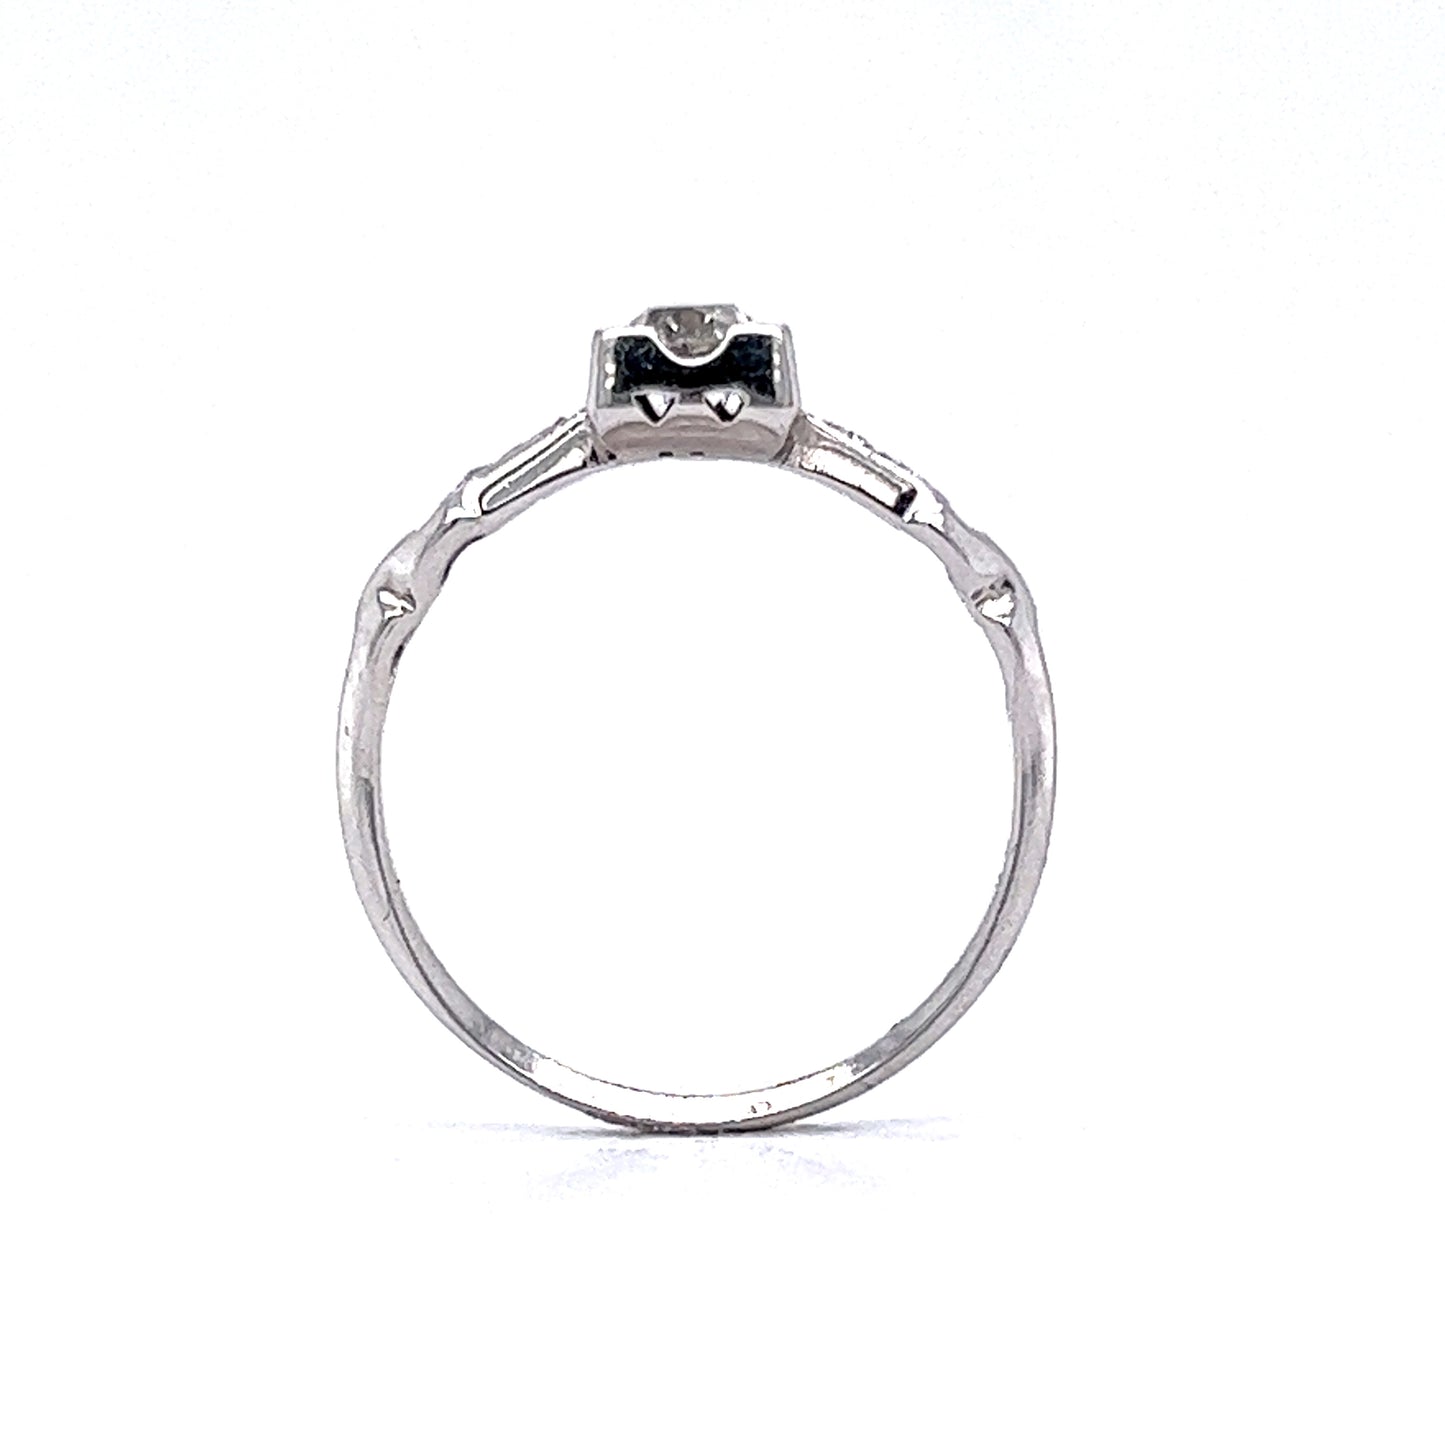 .35 Art Deco Engagement Ring in 18k White Gold